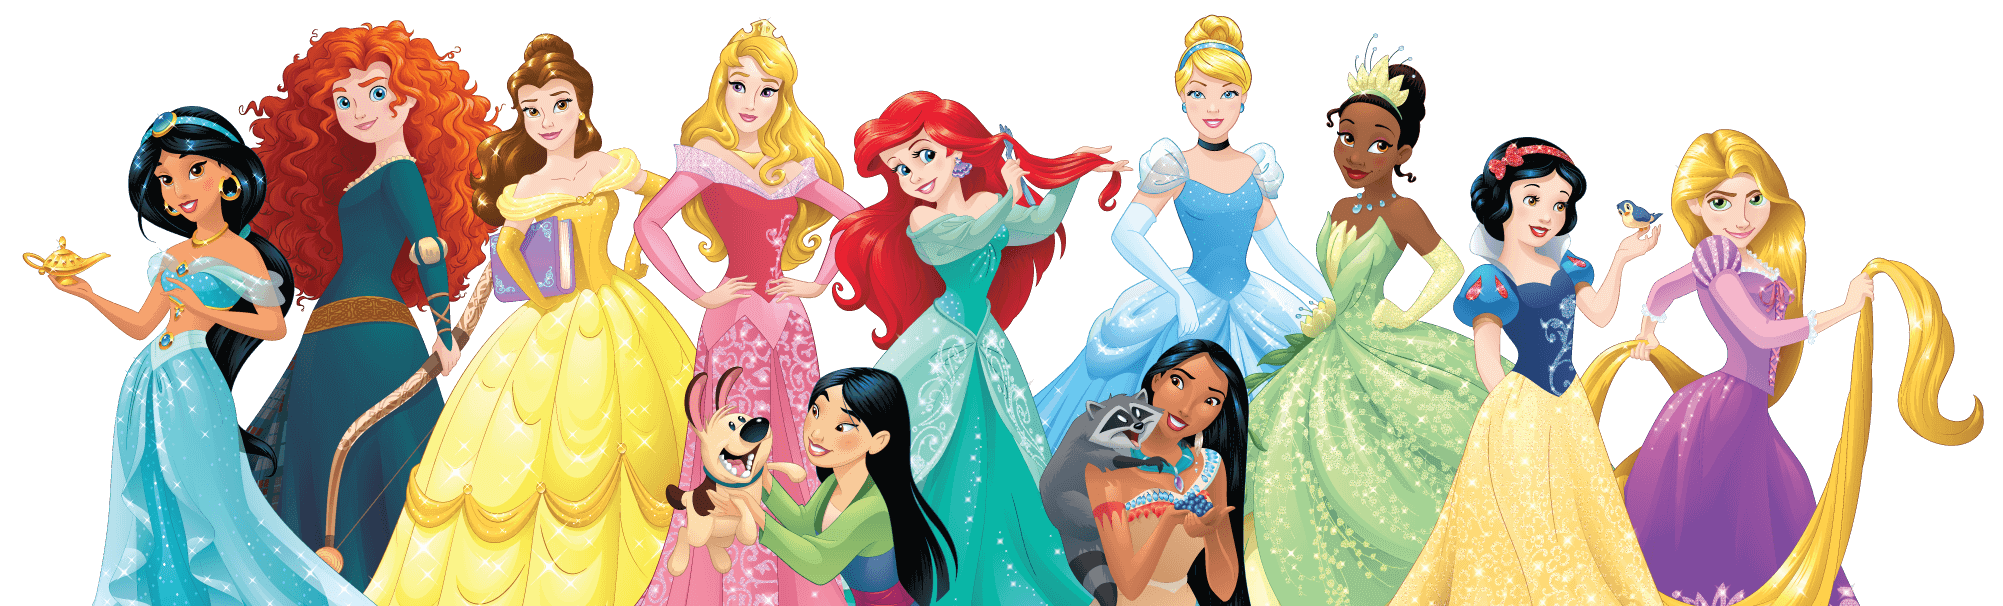 Ariel Belle Aurora Jasmine Rapunzel Princess Disney PNG Image